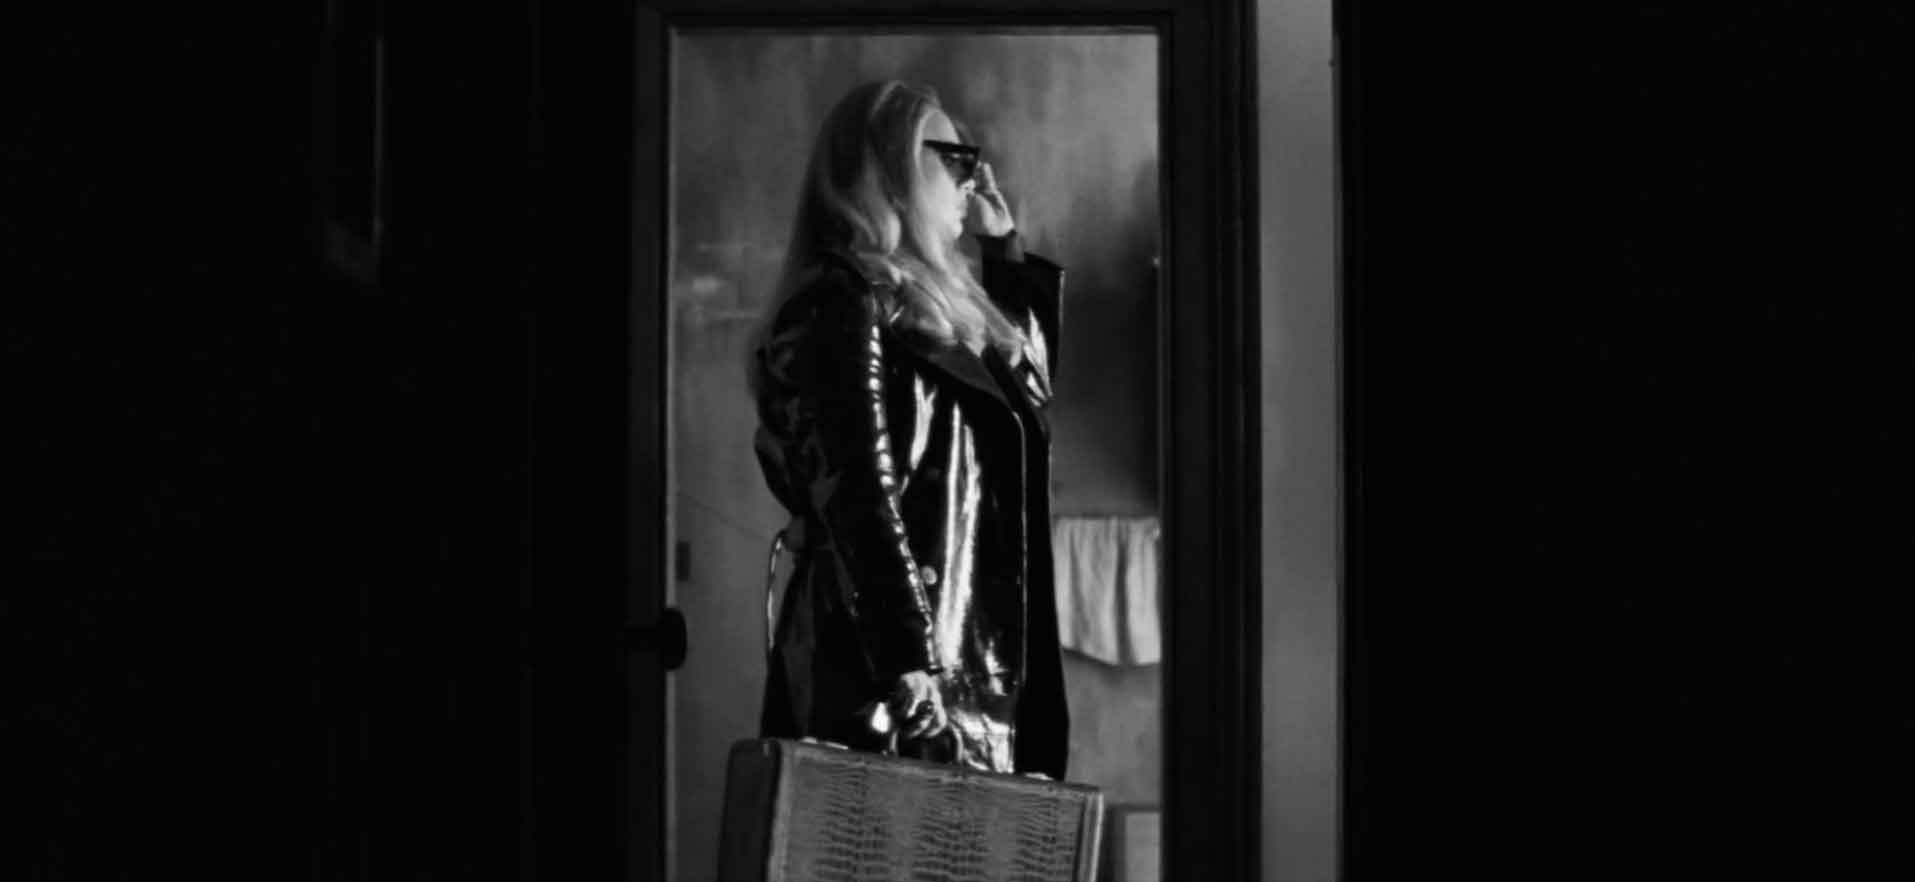 Adele leaving the house in 'Easy On Me' MV